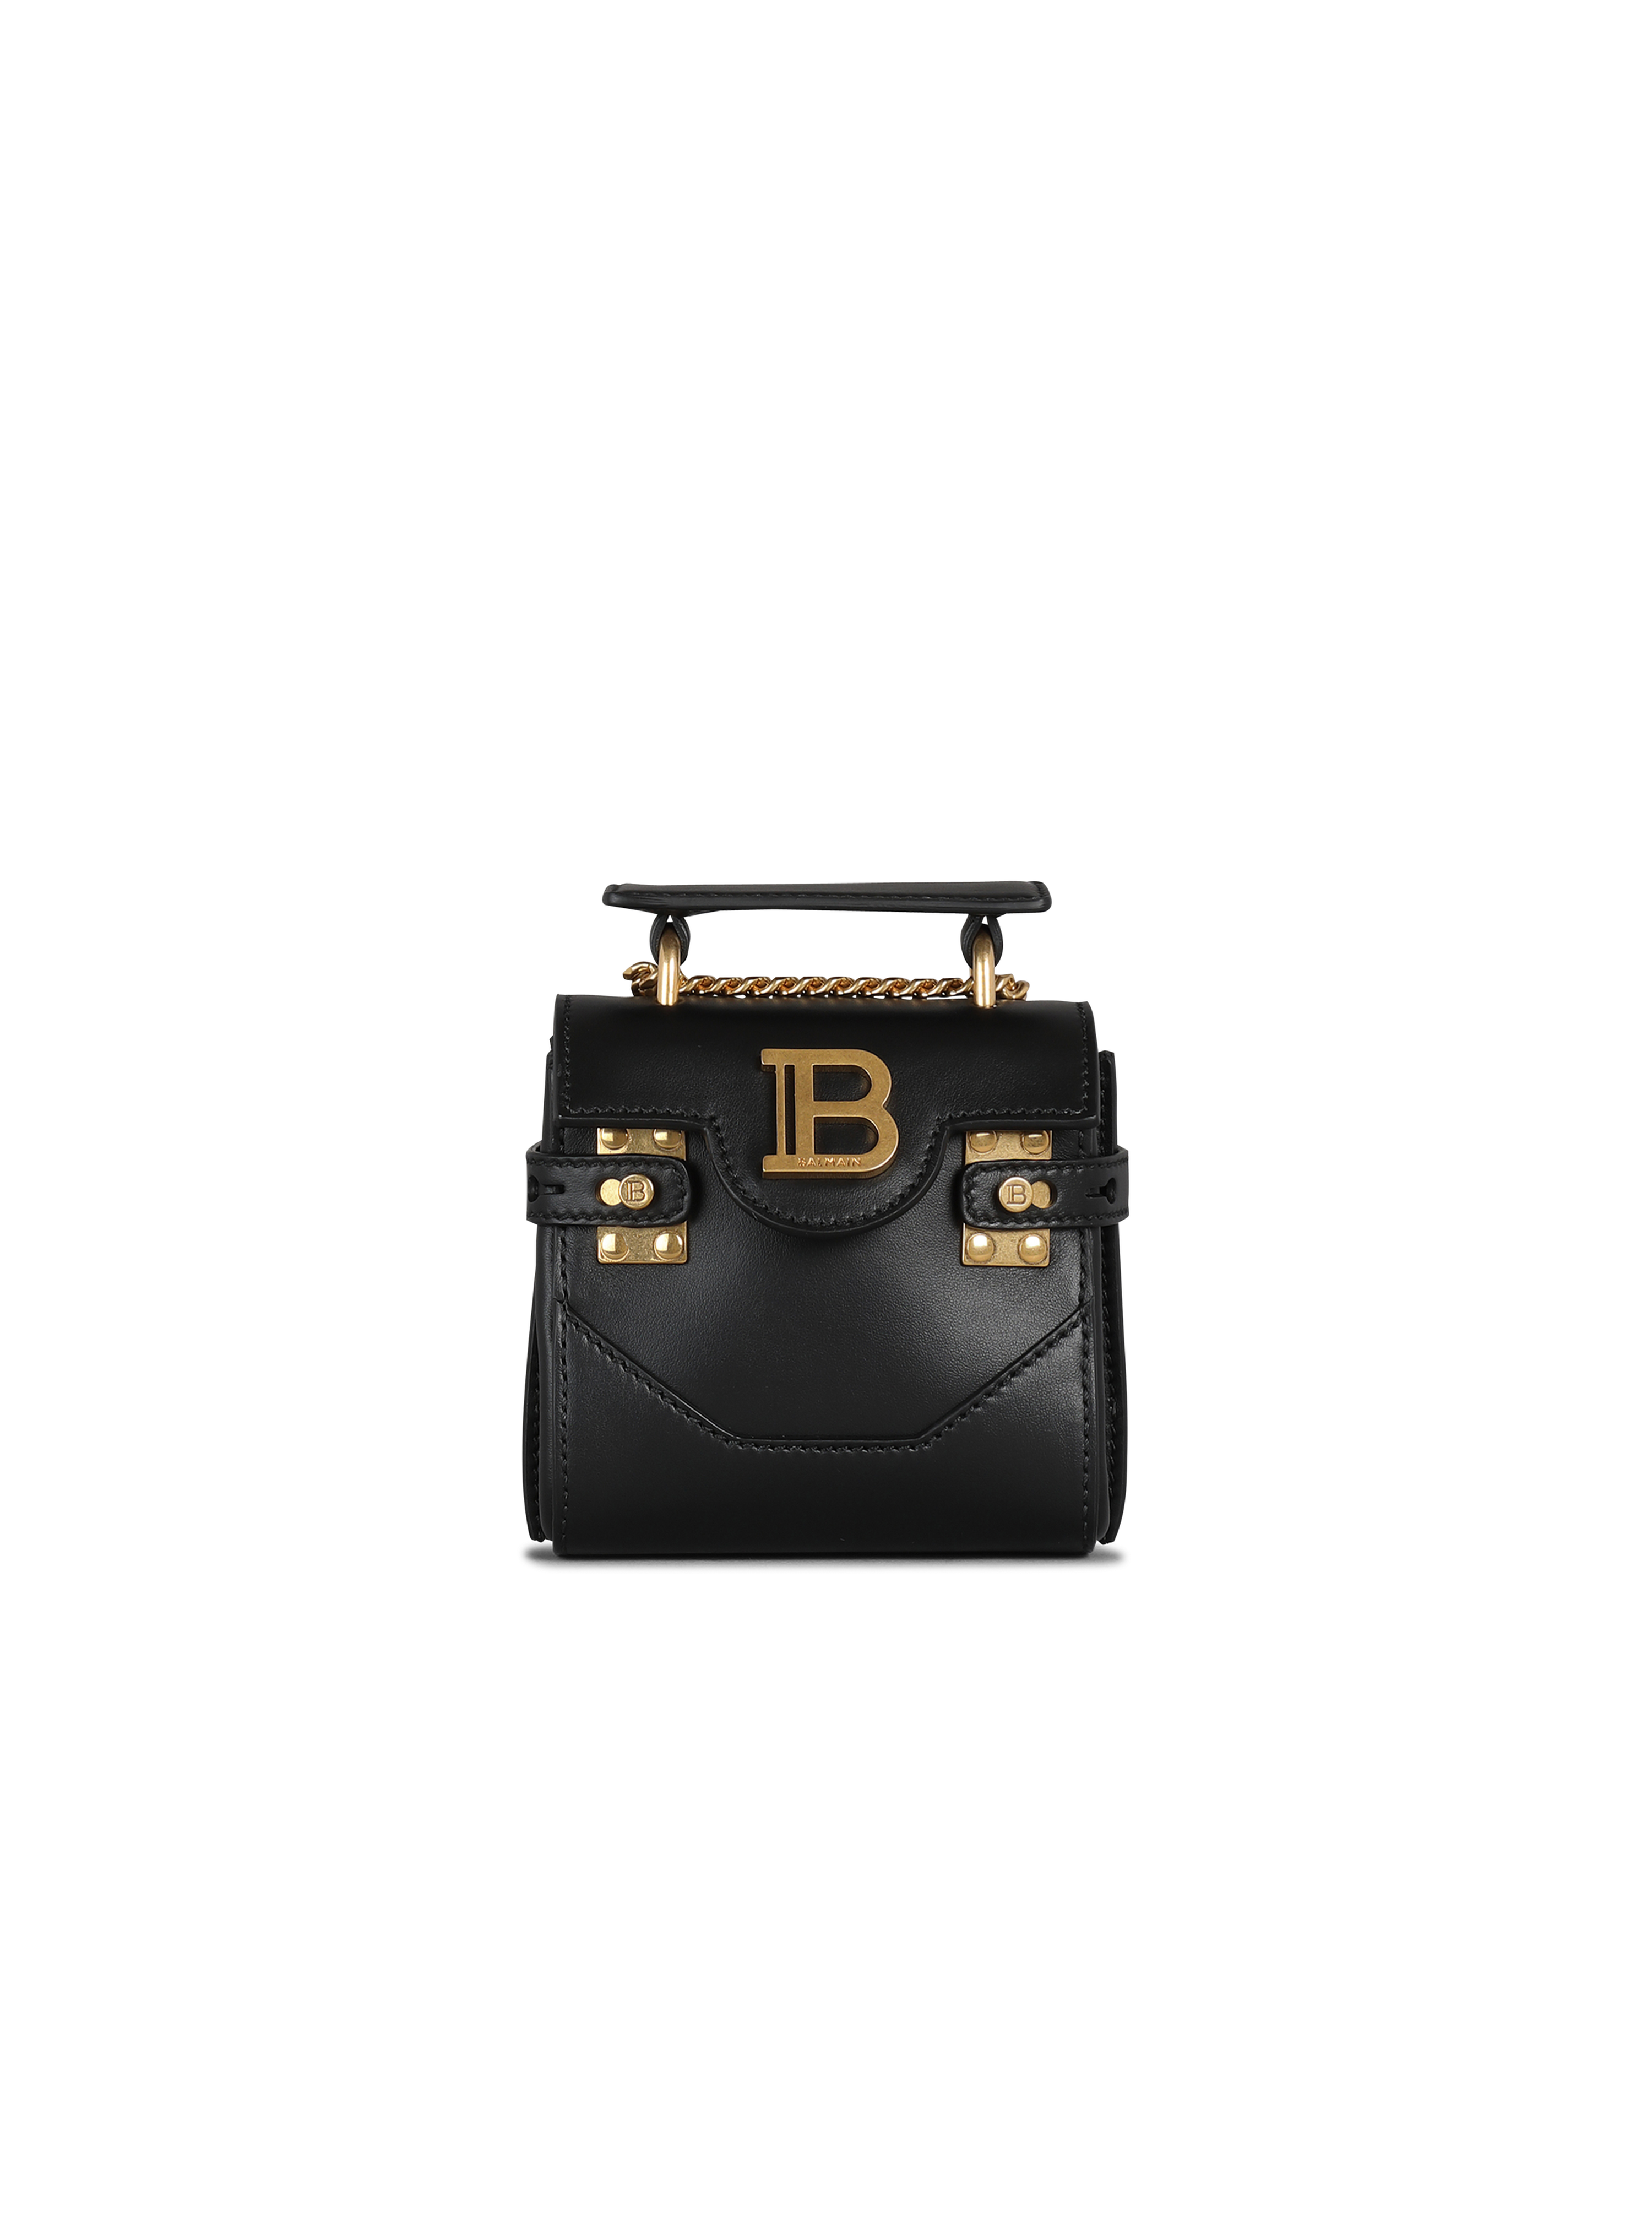 Leather B-Buzz Mini bag, black